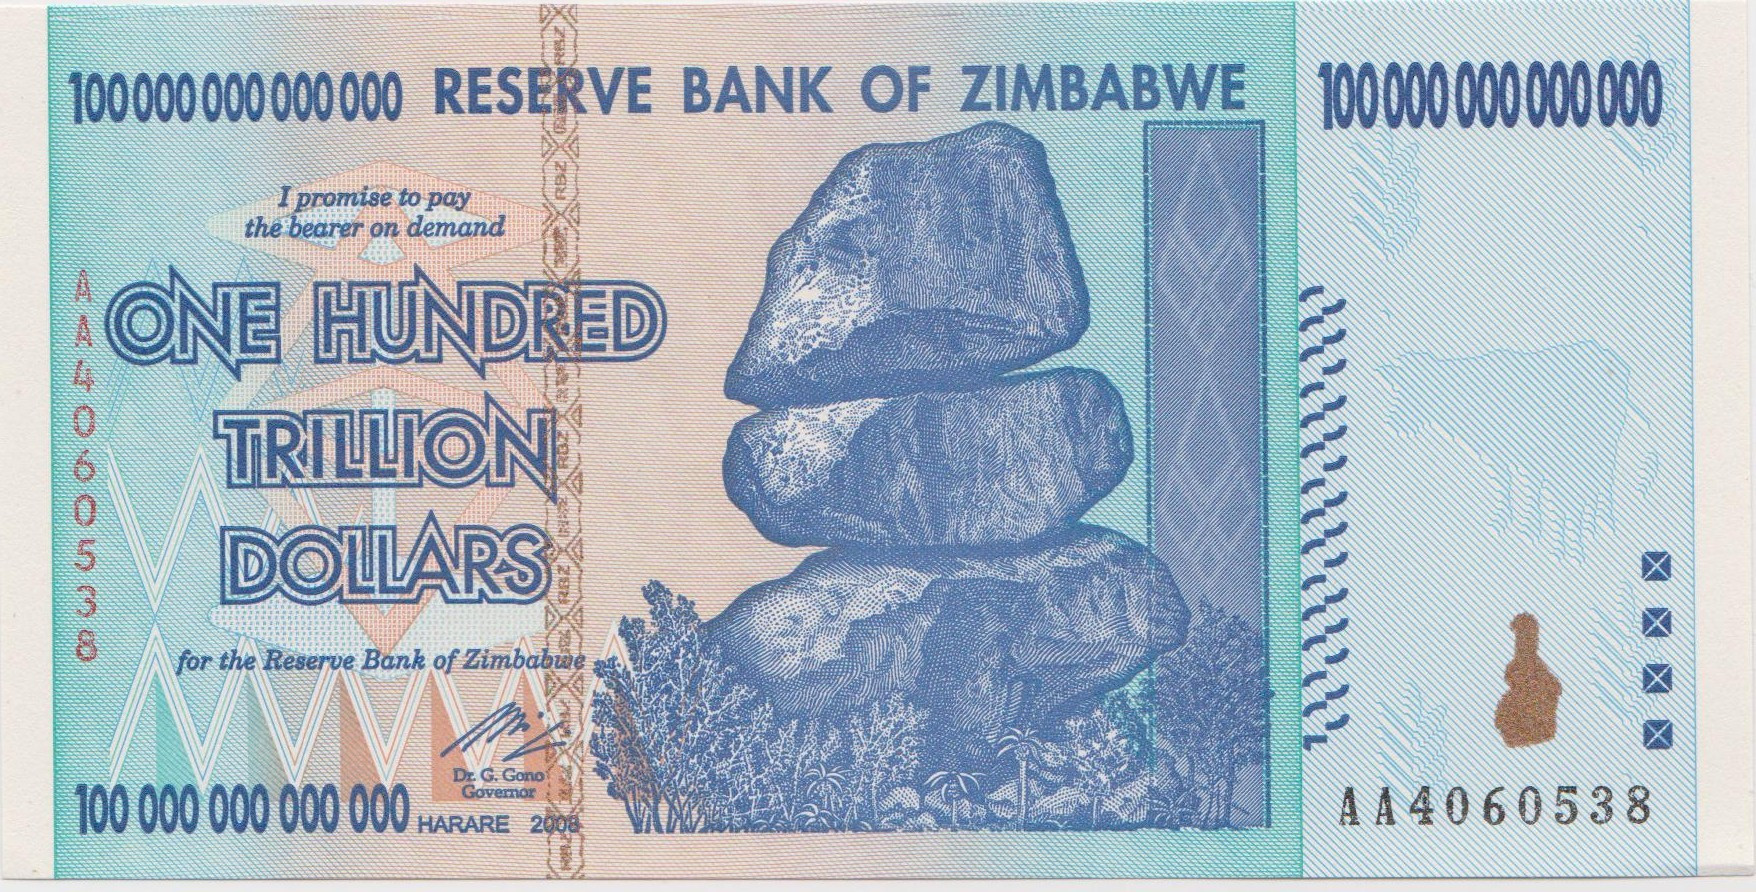 9. Zimbabwe a tiparit o bancnota de 1 trilion de dolari